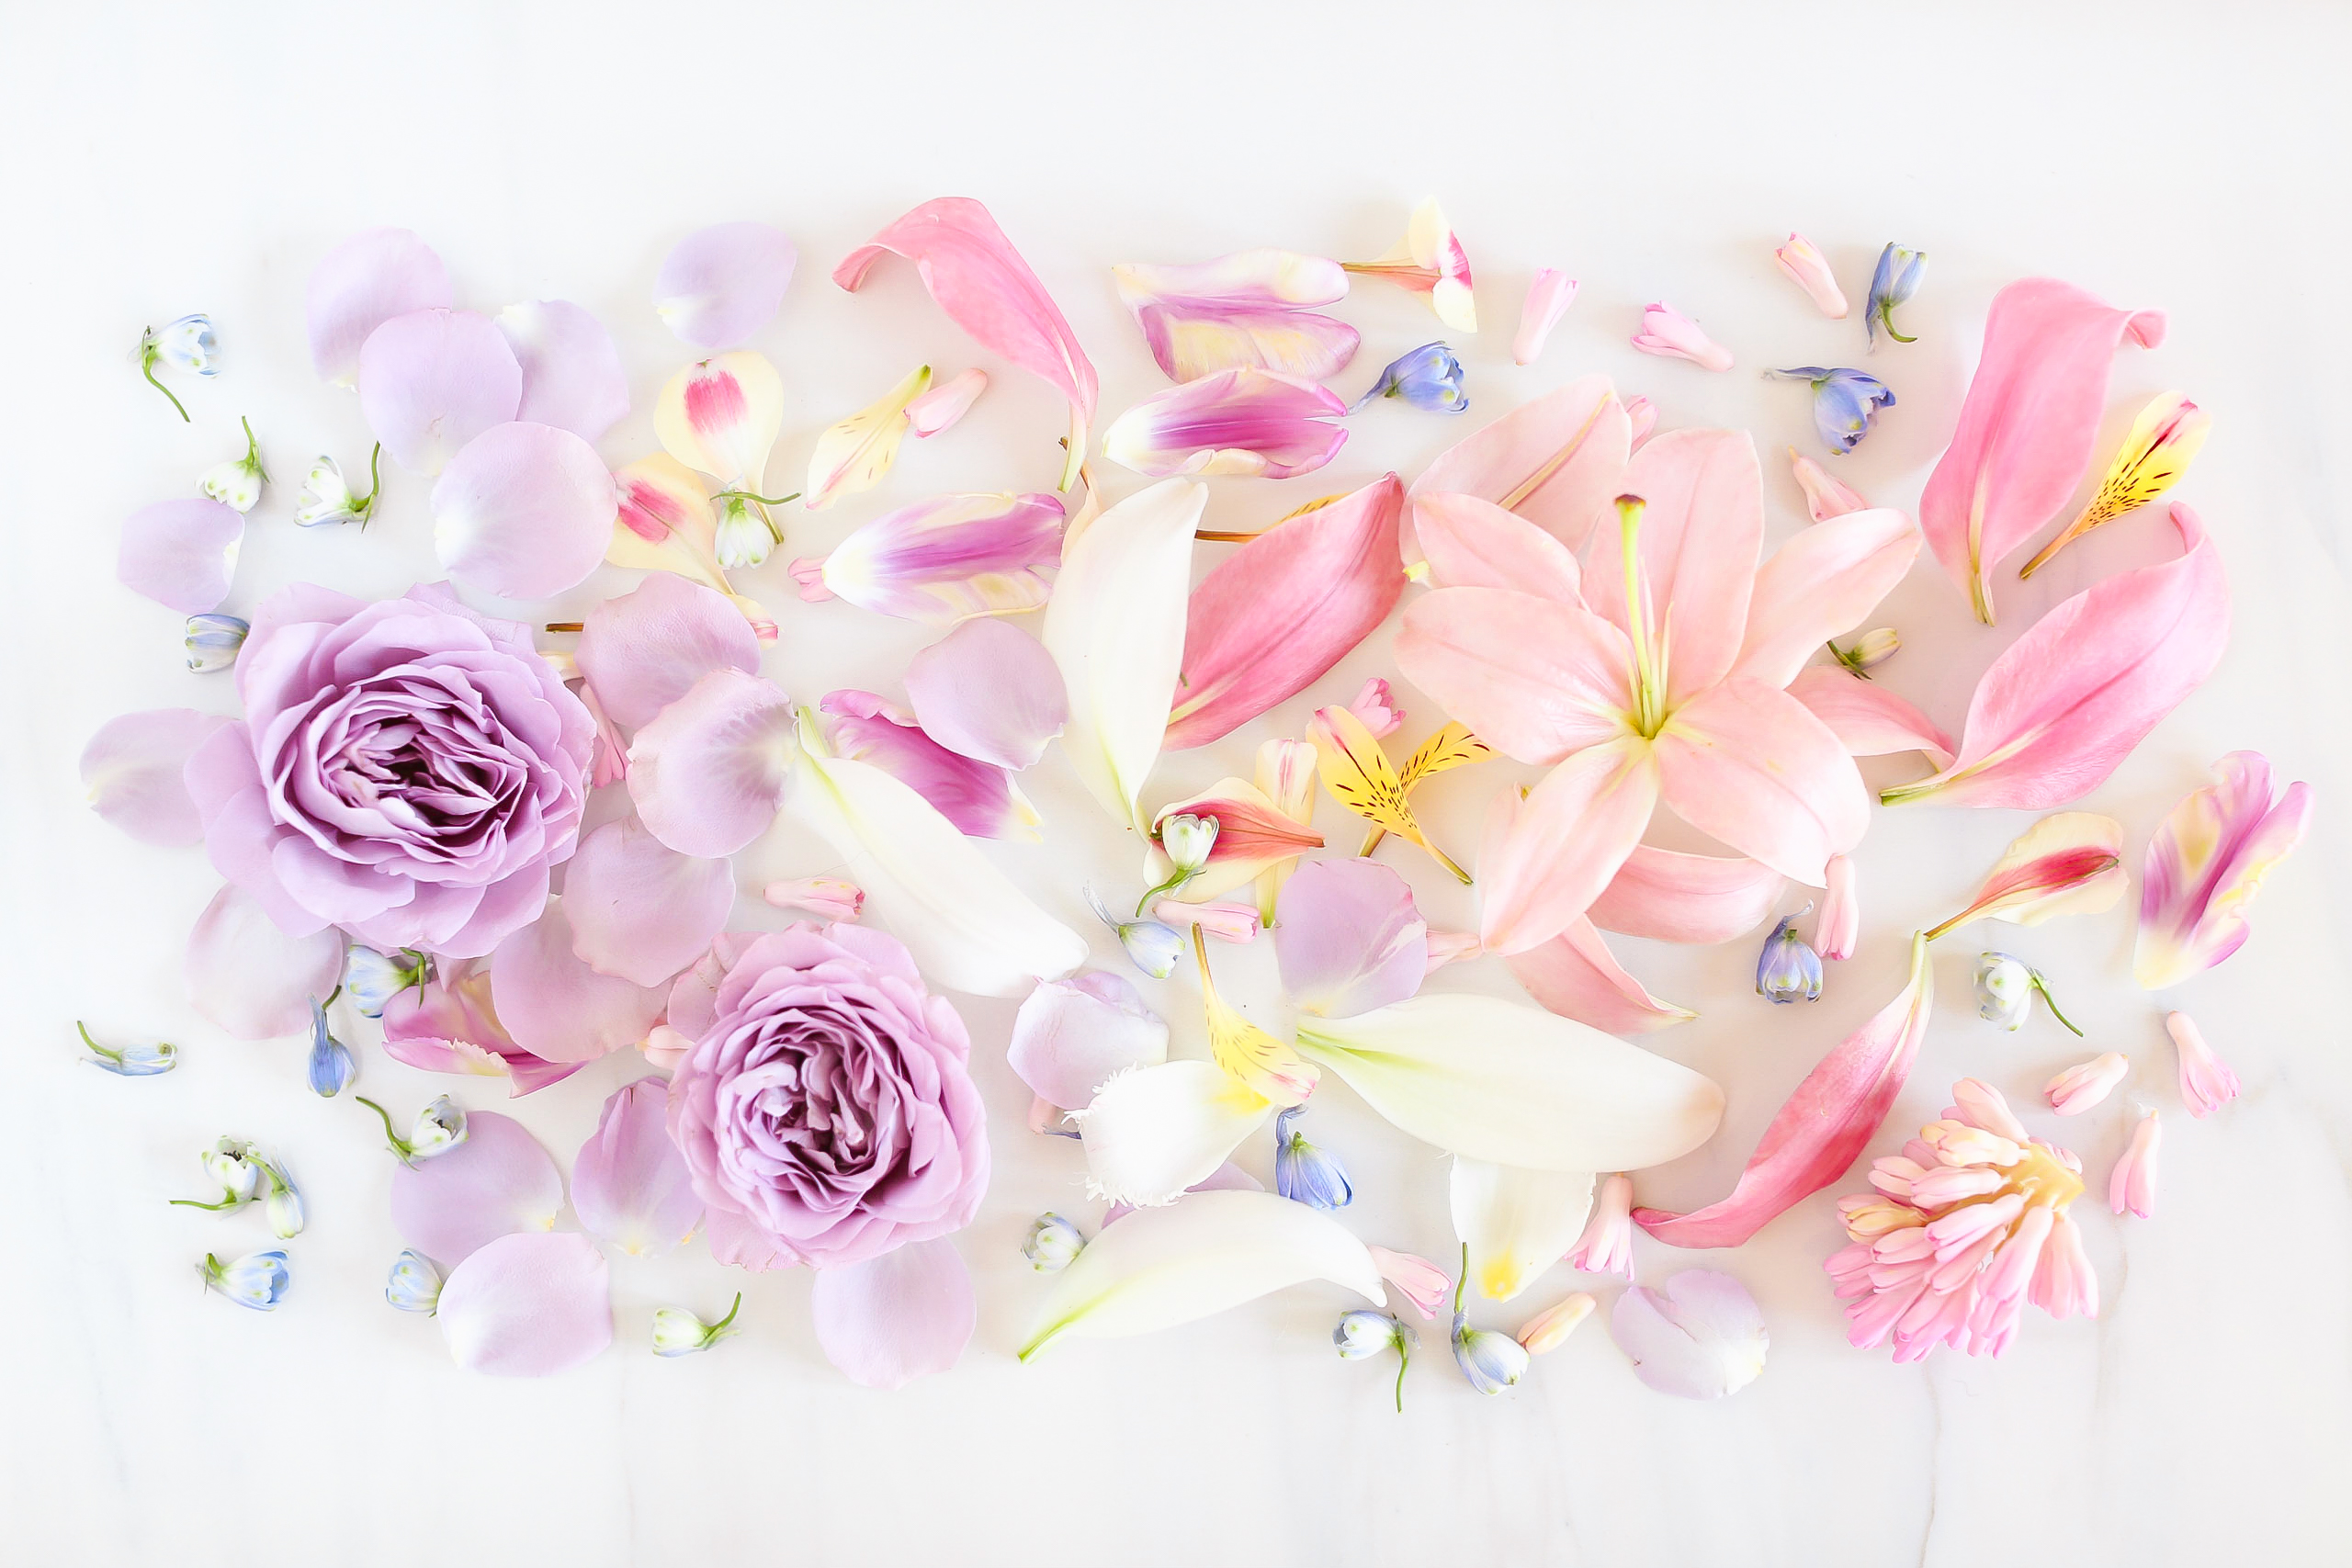 Digital Blooms June 2018 | Free Pantone Inspired Desktop Wallpapers for Spring and Summer | Free Pastel Tech Wallpapers | Design 3 // JustineCelina.com x Rebecca Dawn Design